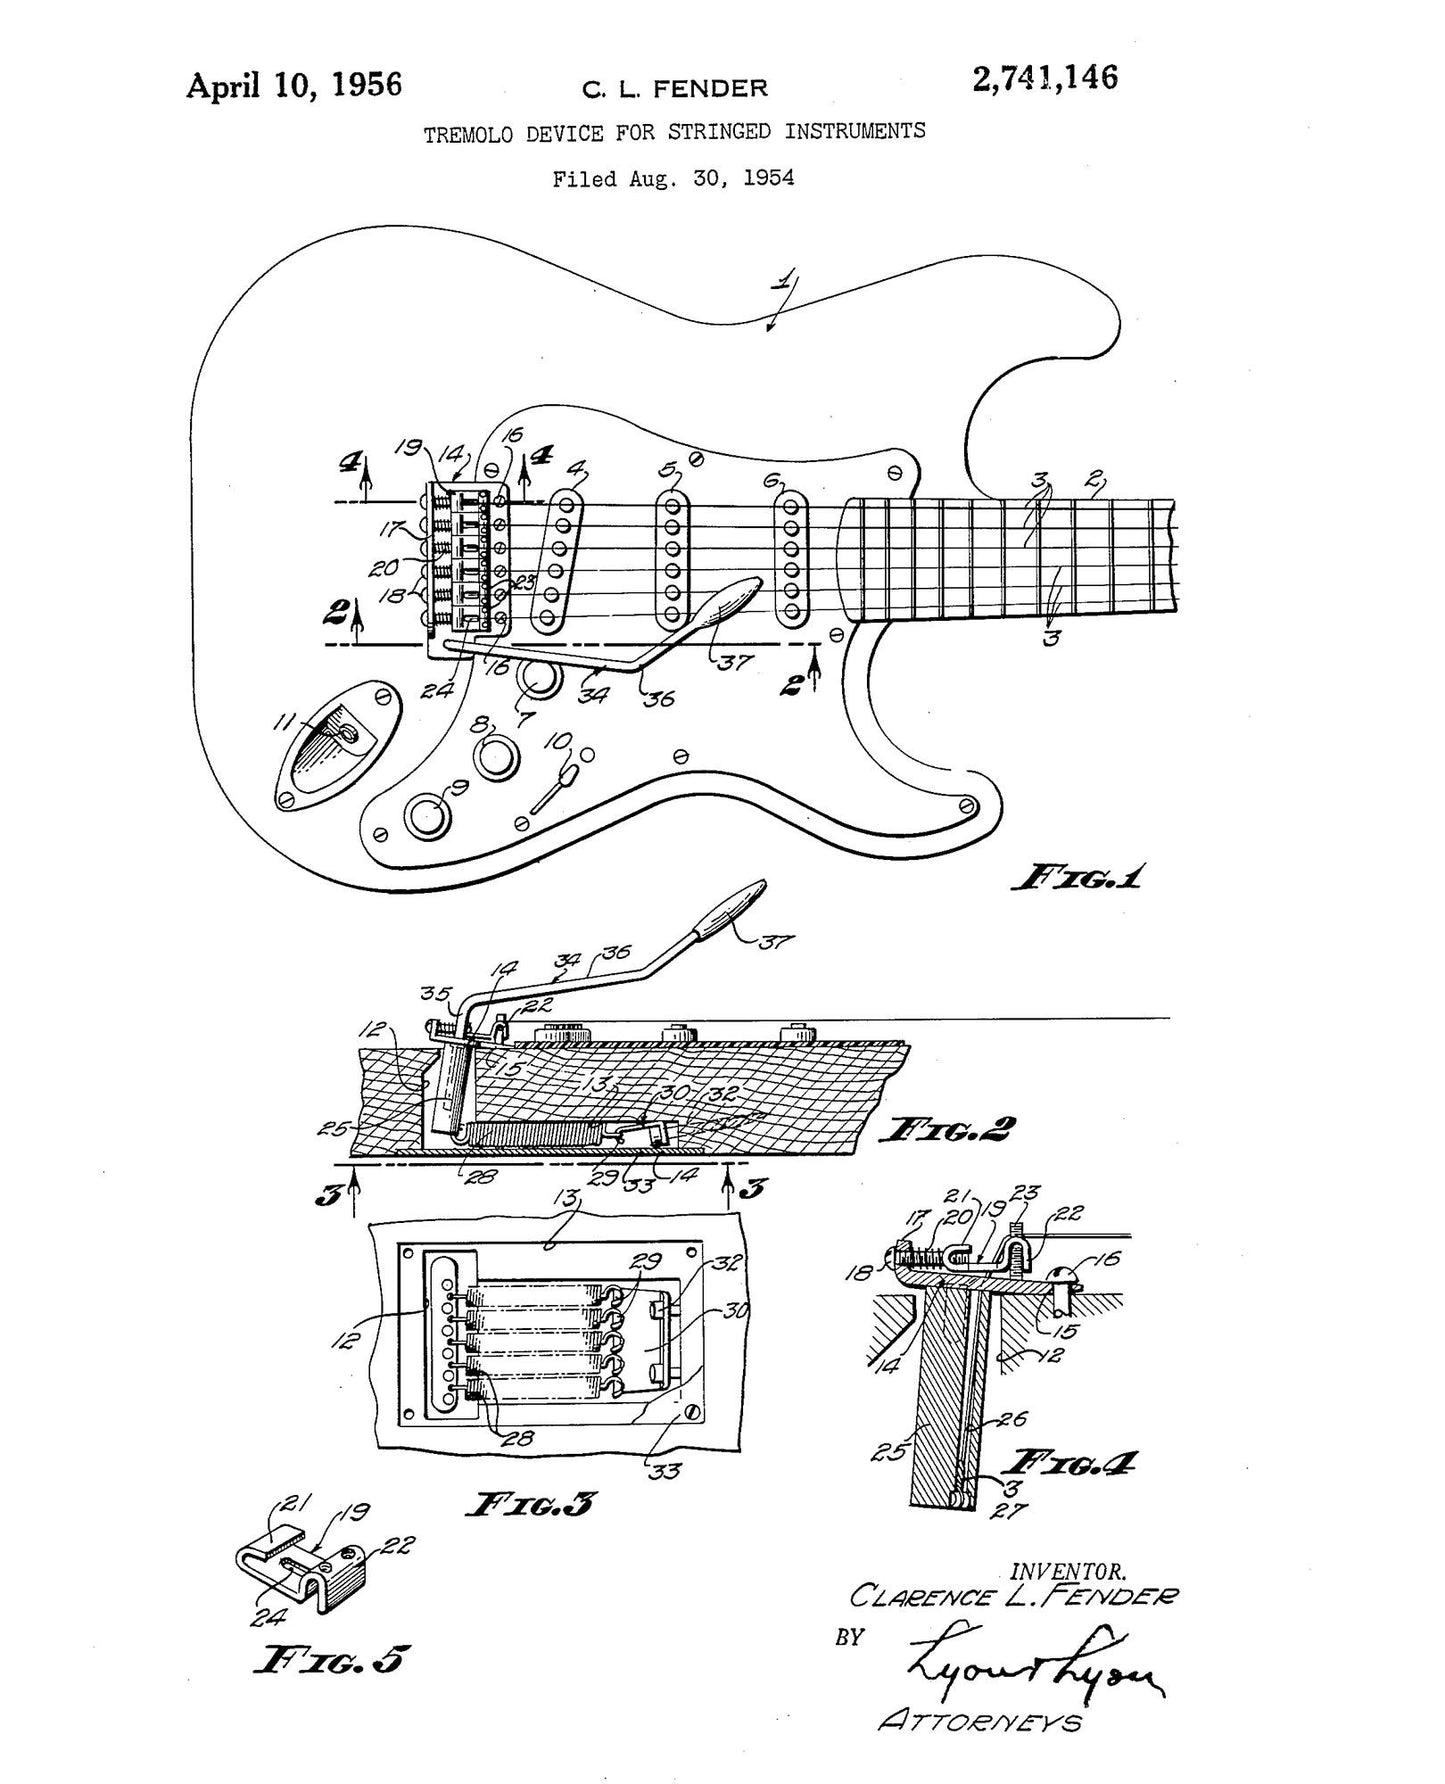 Fender Tremolo Original Patent Application